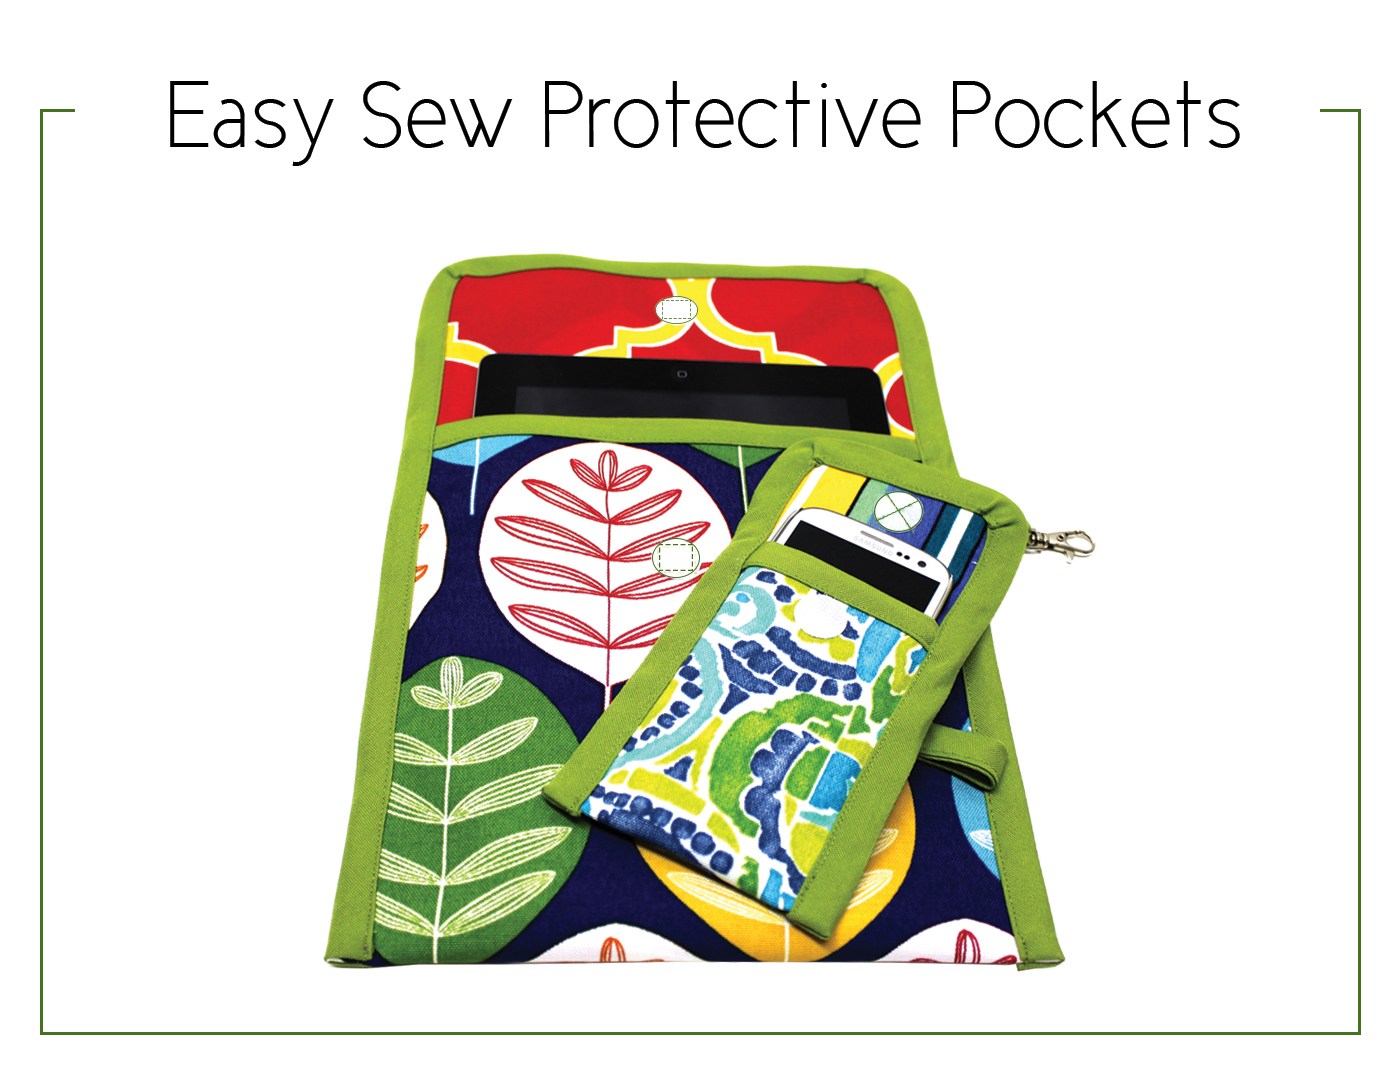 Closeup of a protective pocket with green foliage motif fabric